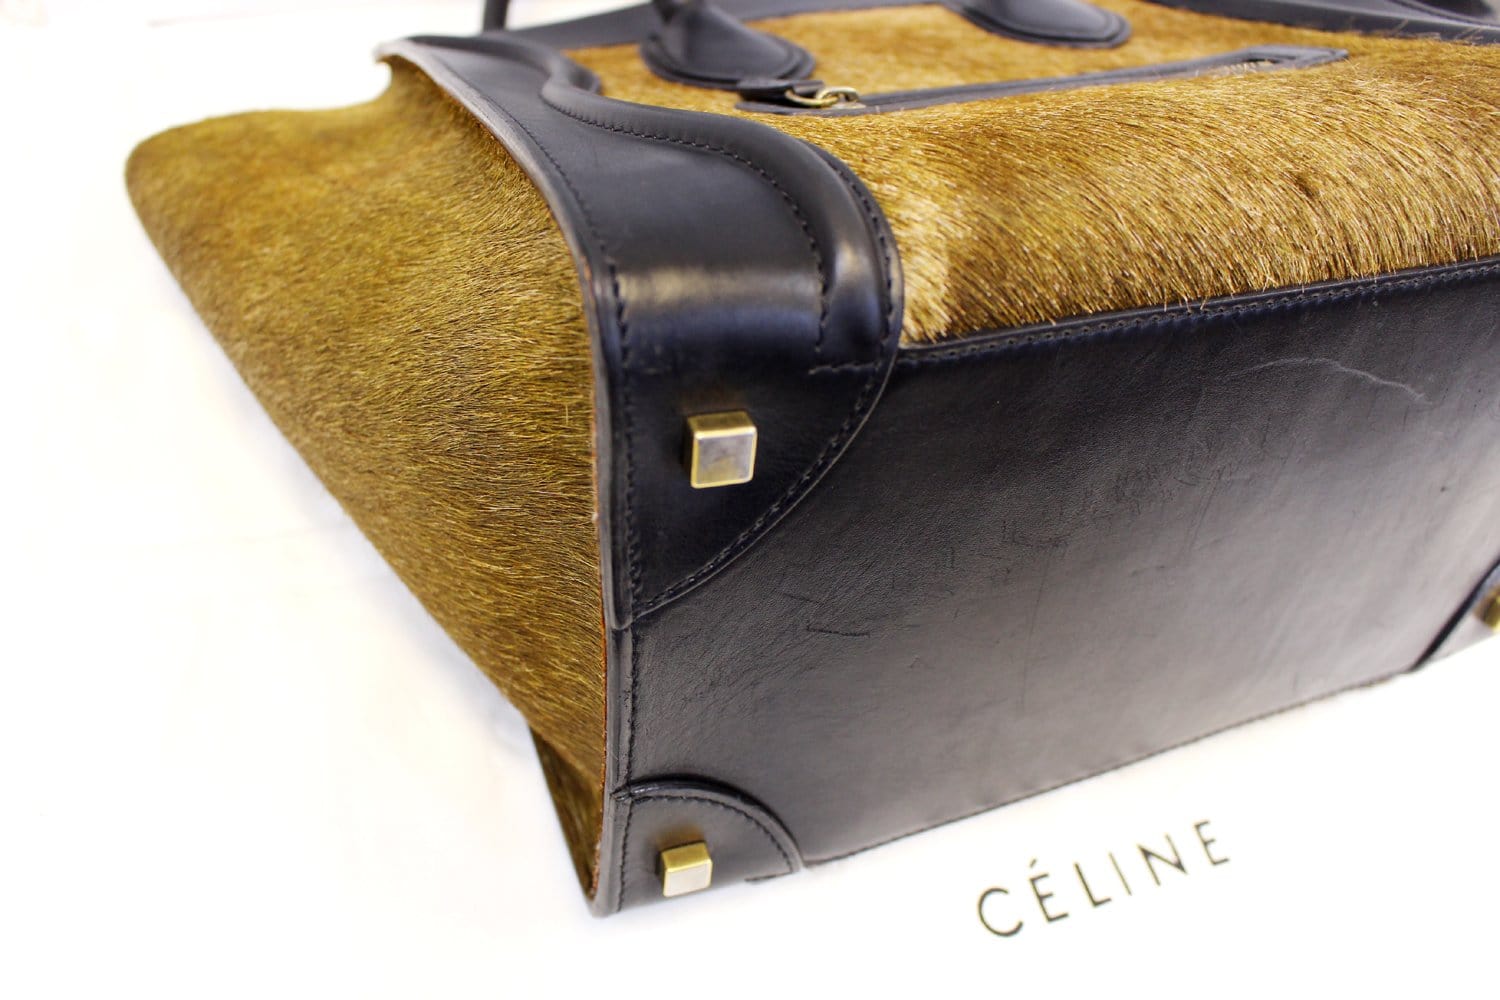 Celine Pony Hair Mini Tri-Color Luggage Tote Bag